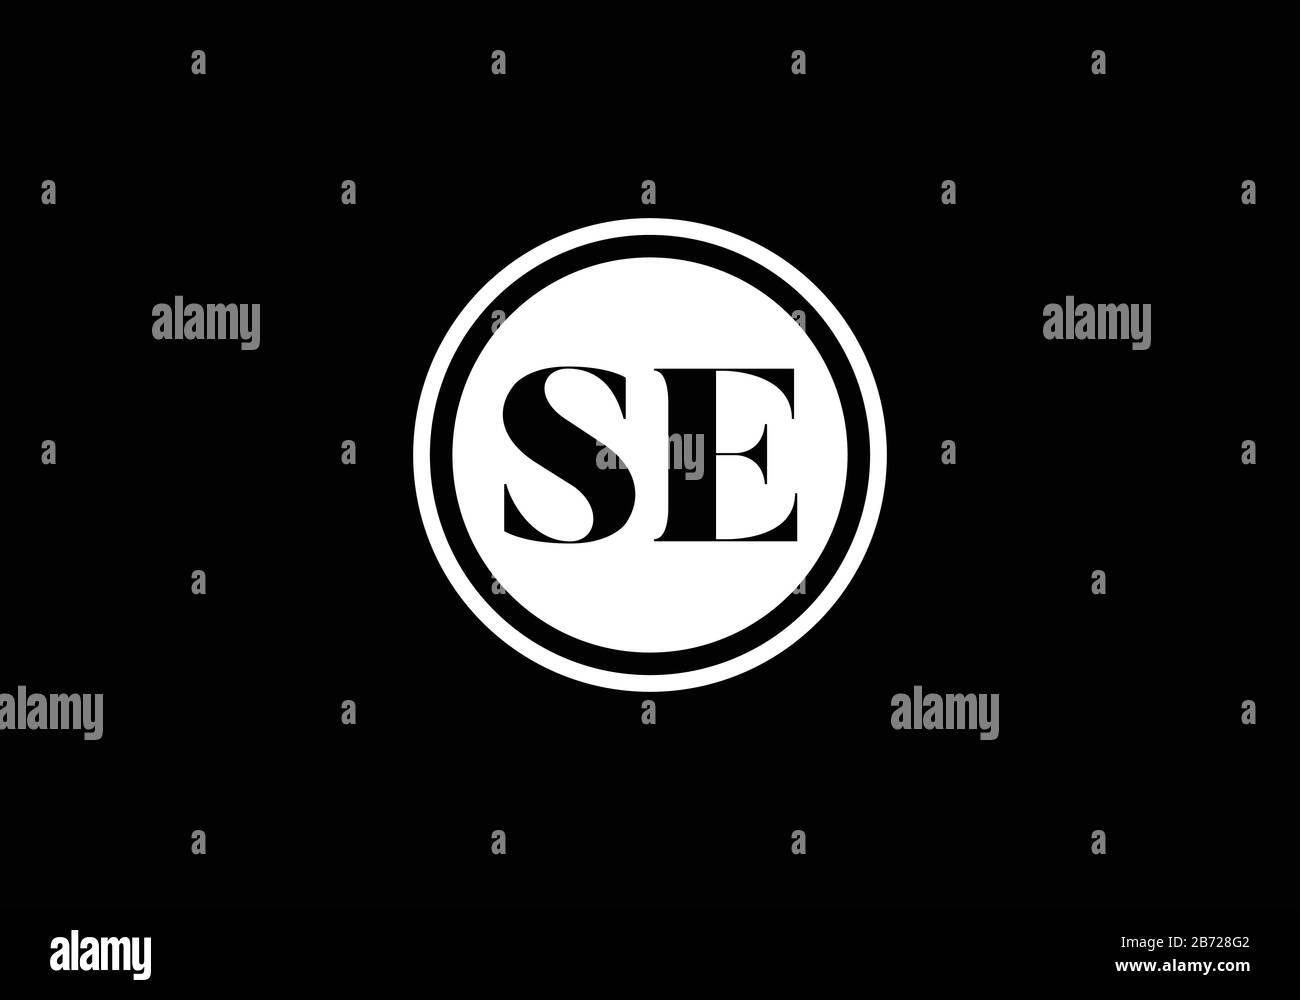 S E, SE Initial Letter Logo design vector template, Graphic Alphabet Symbol for Corporate Business Identity Stock Vector